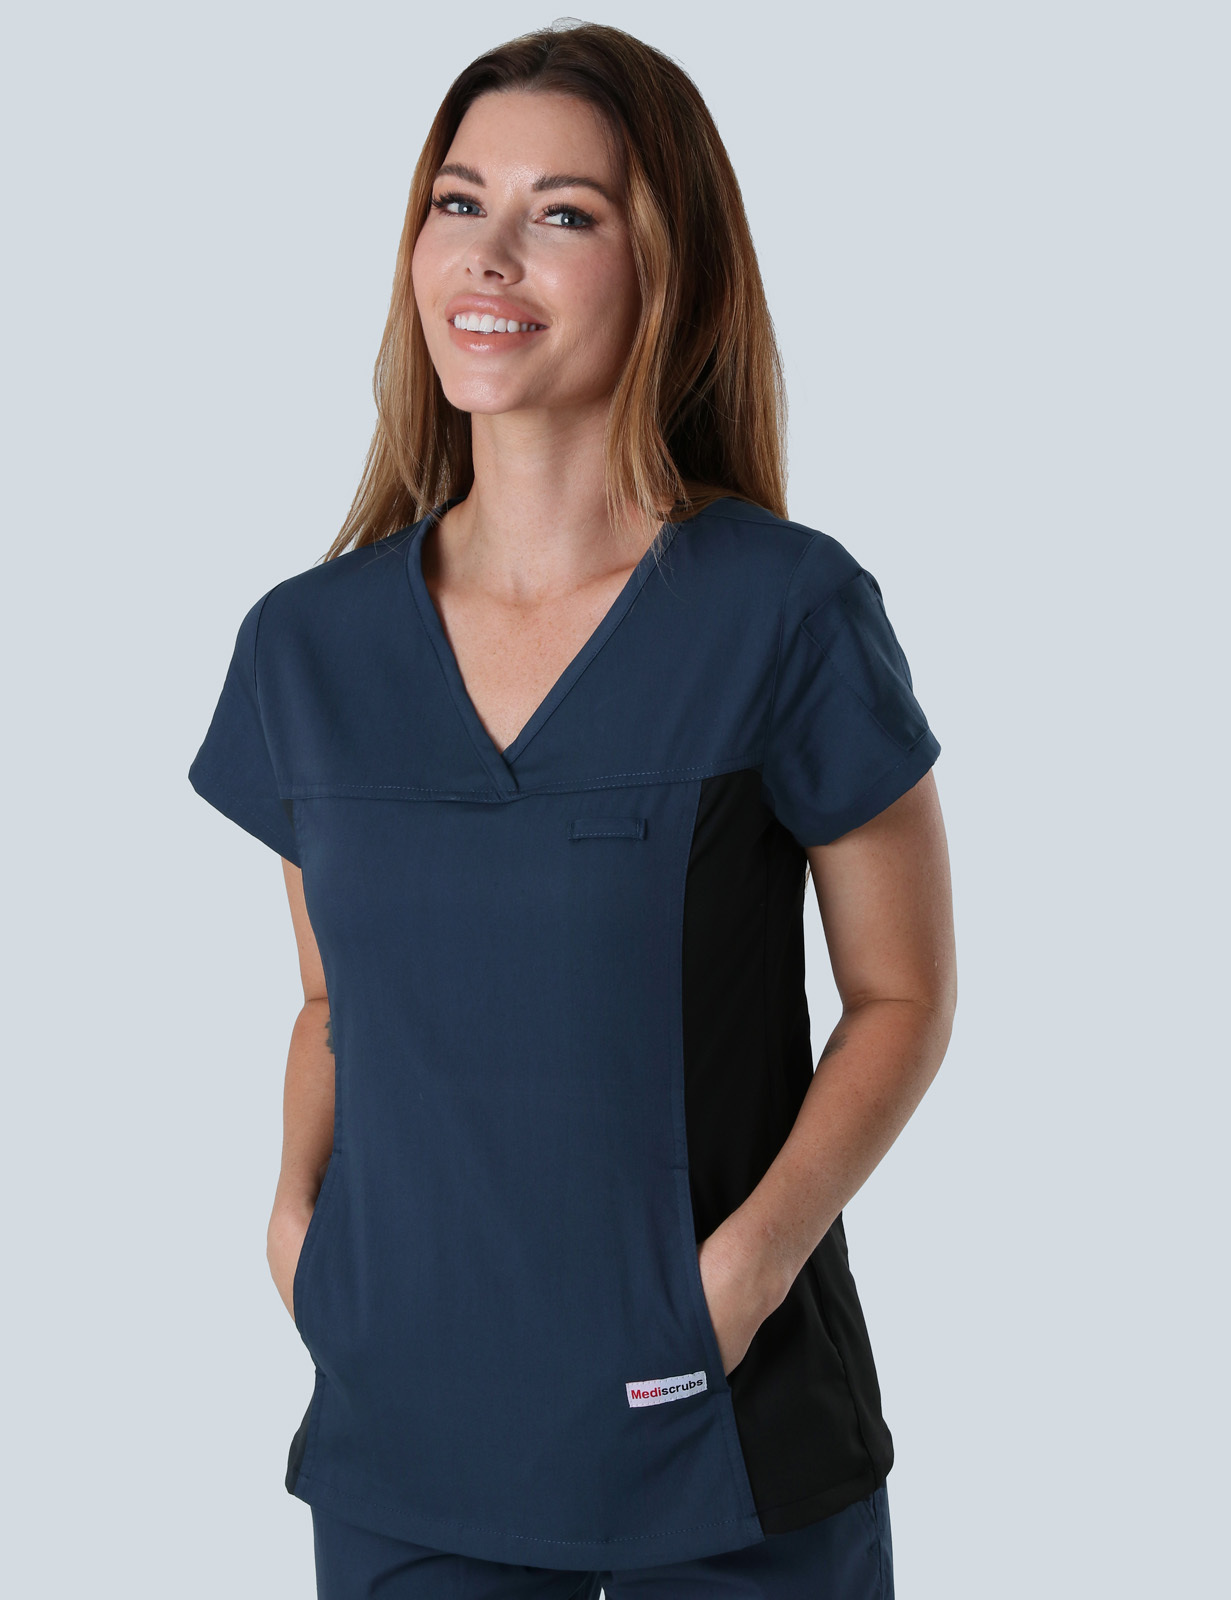 UQ Vets Gatton Junior Nurse Uniform Top Only Bundle (Women's Fit Spandex Top in Navy incl Logos)